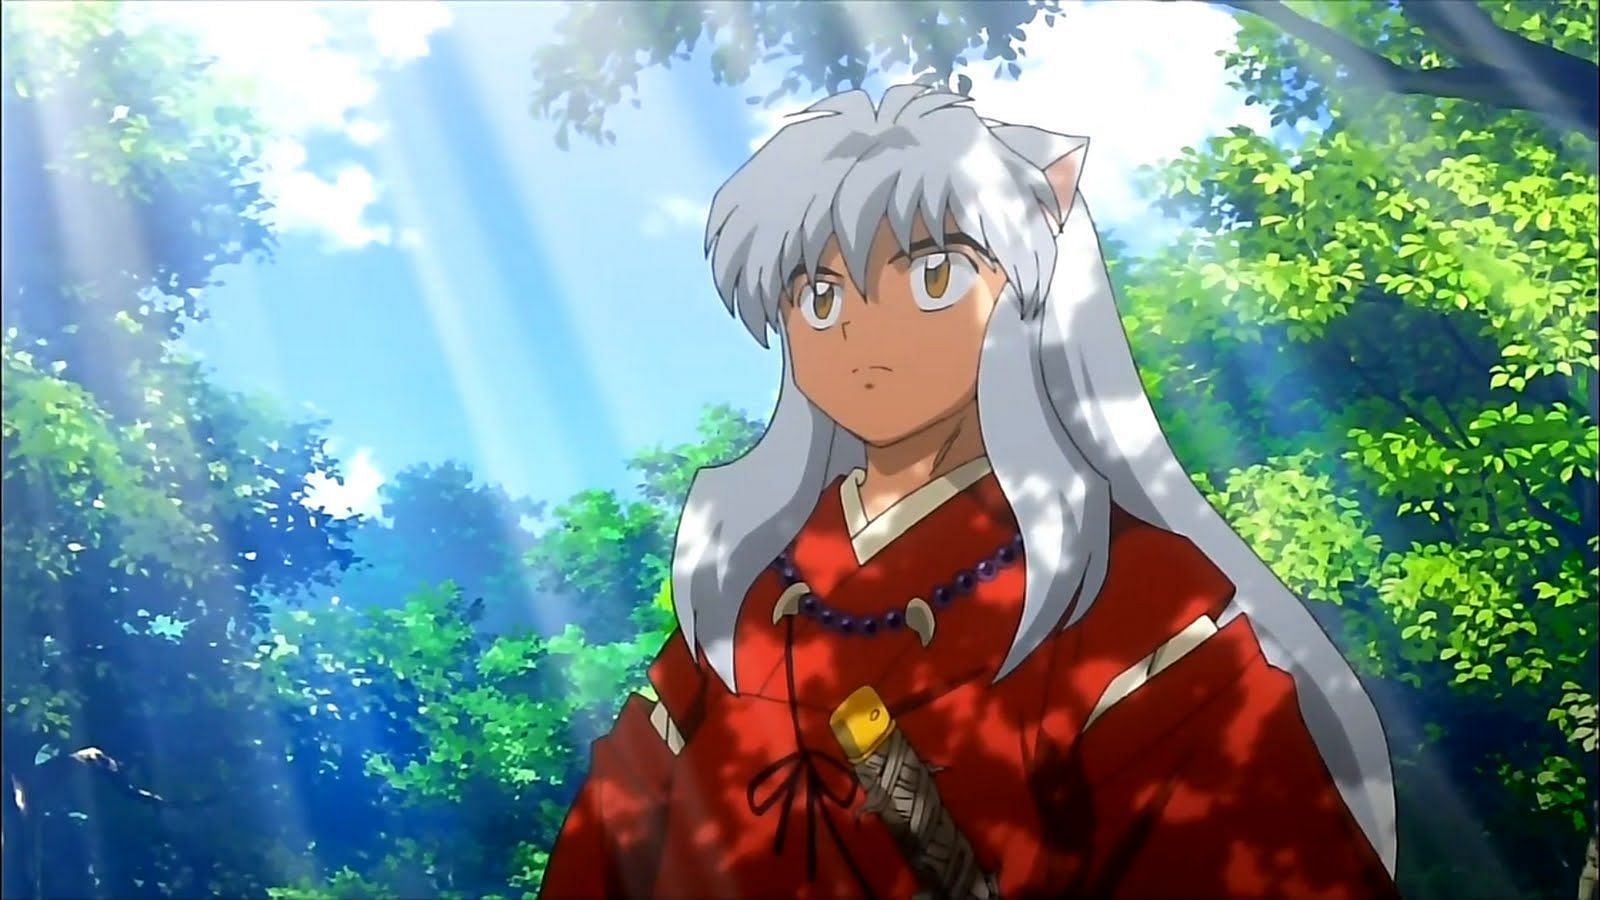 Inuyasha, as seen in the anime Inuyasha (Image via Studio Sunrise Studios)